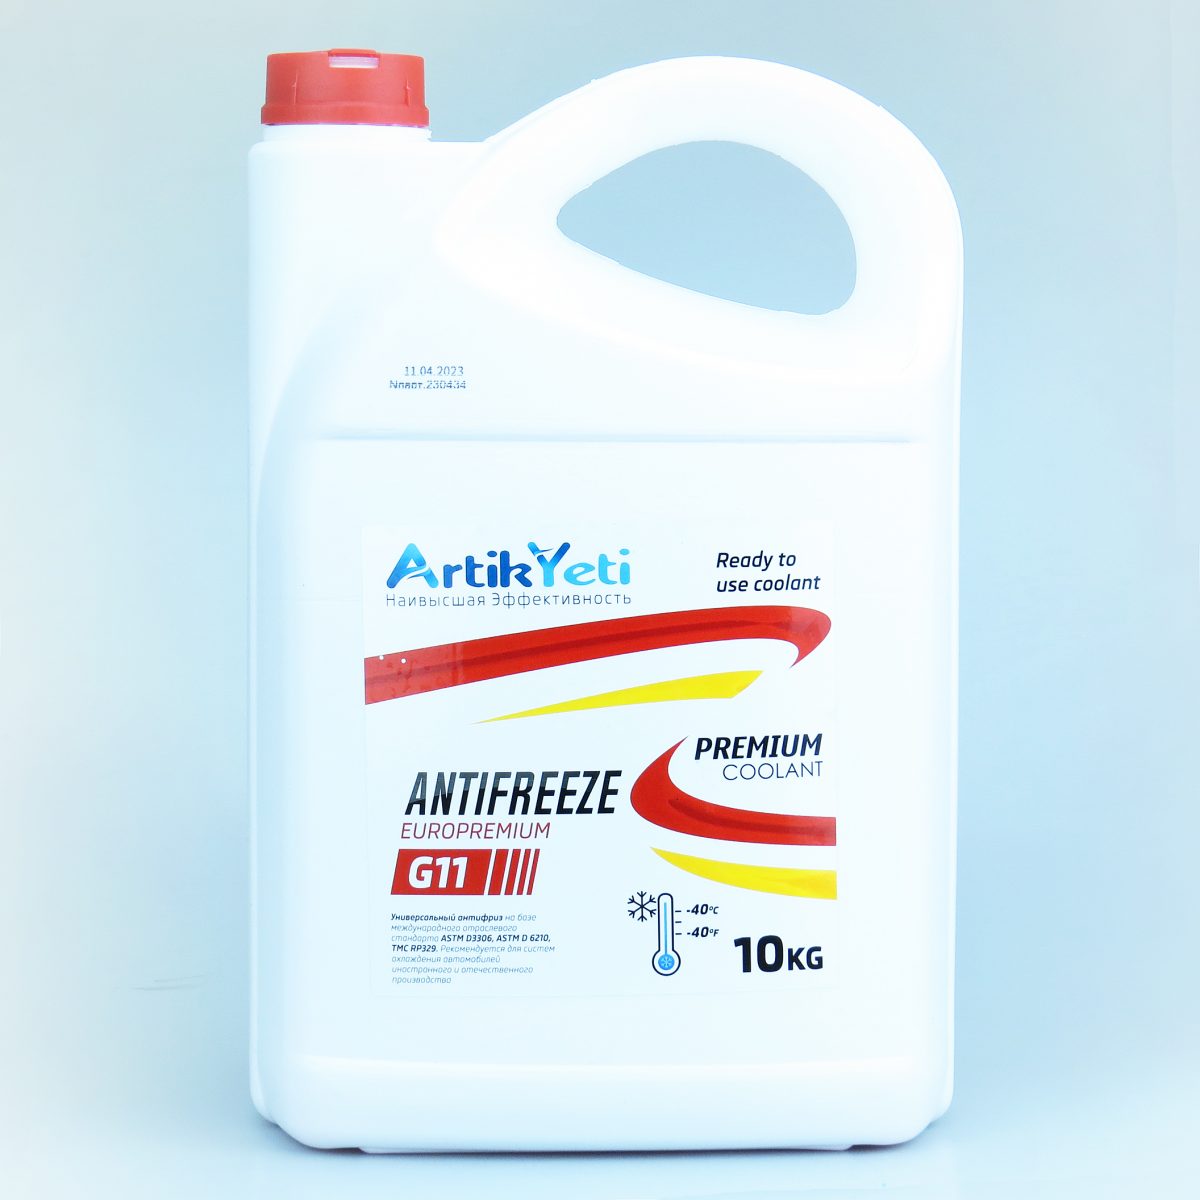 ArtikYeti Antifreeze Euro Premium G11 красный 10кг